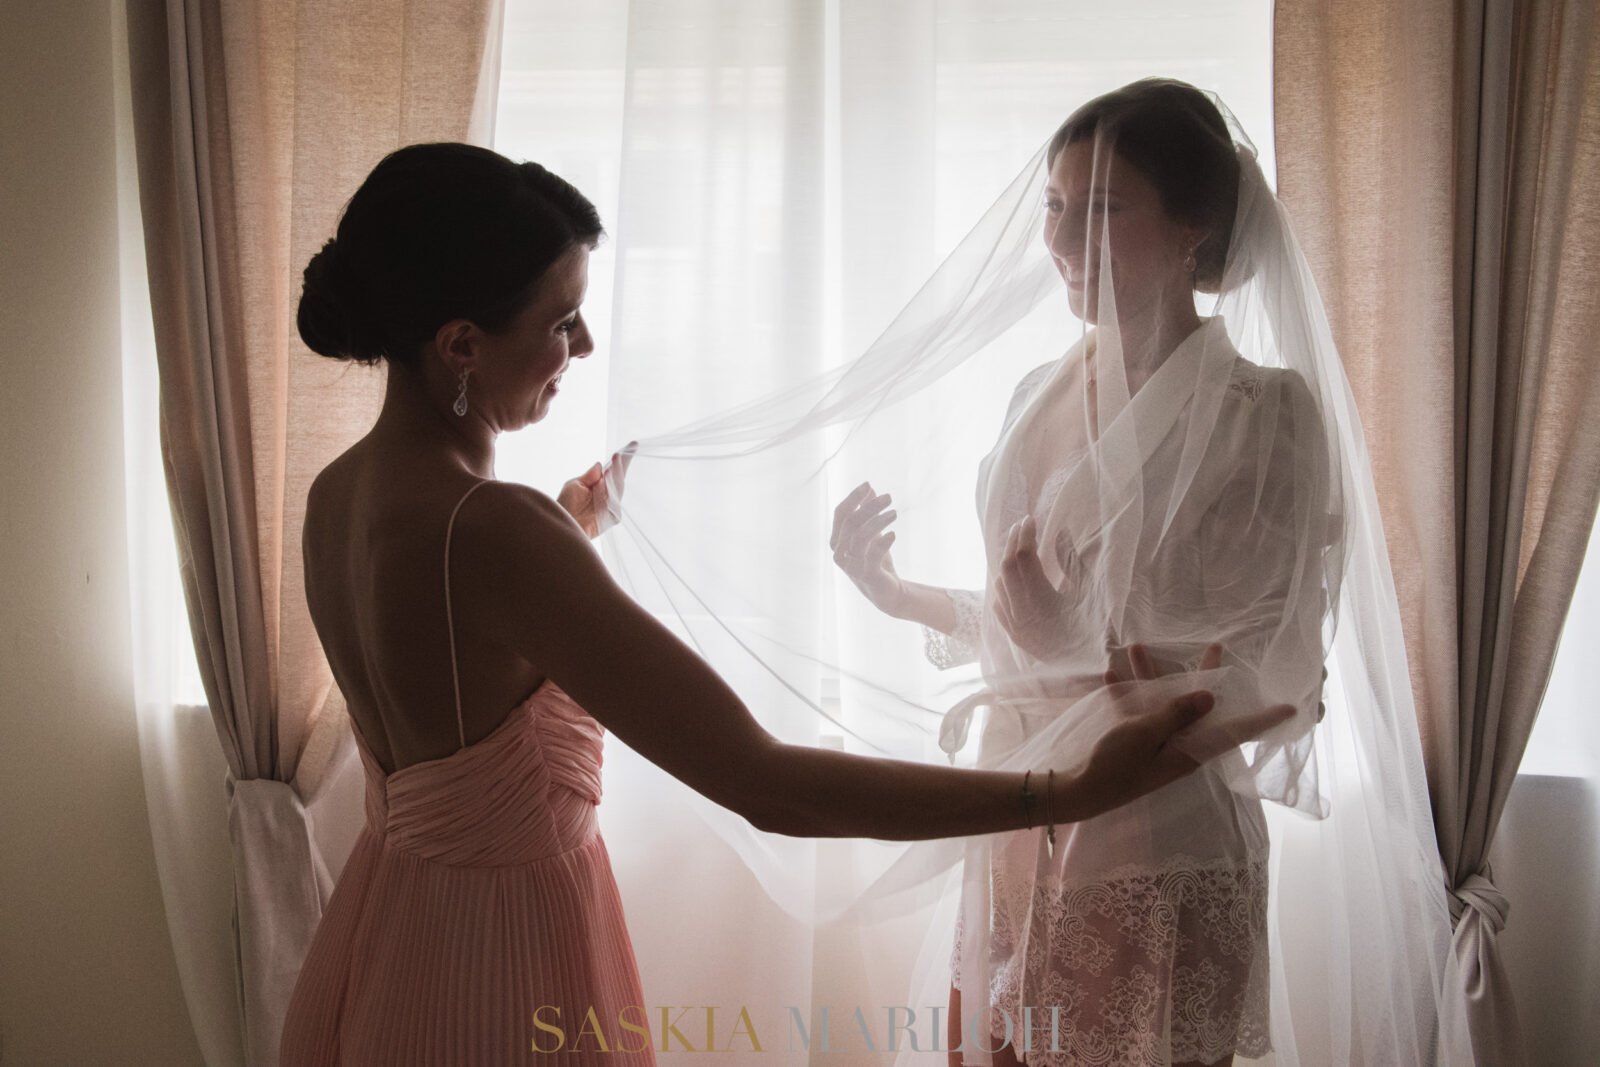 RHEINGAU-ITALIAN-WEDDING-ITALIENISCHE-HOCHZEIT-FOTO-SASKIA-MARLOH-PHOTOGRAPHY-30